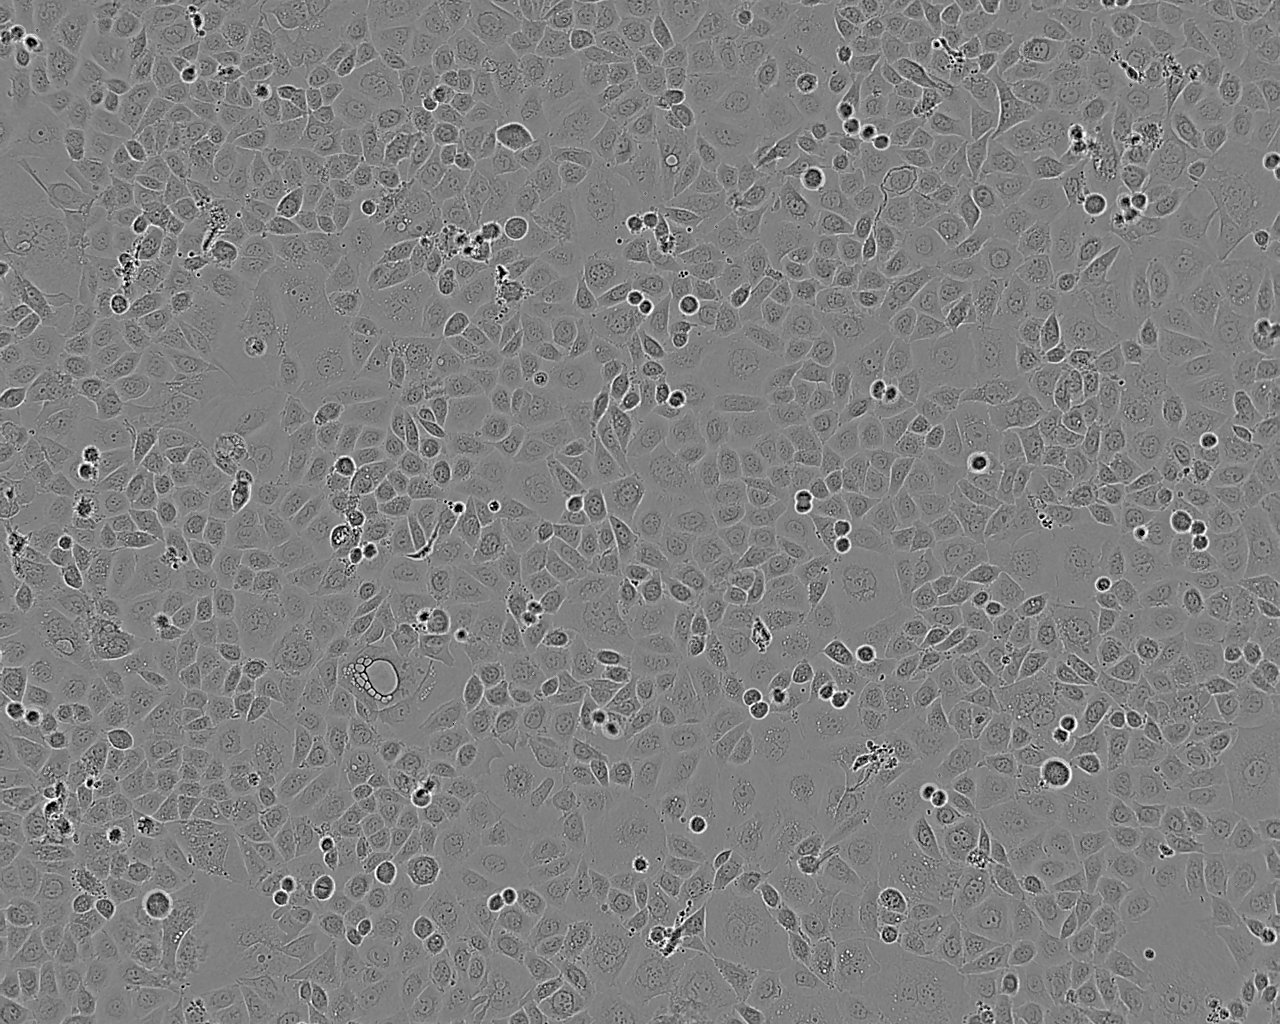 NCI-H1781 Cell:人支气管肺泡腺癌细胞系,NCI-H1781 Cell